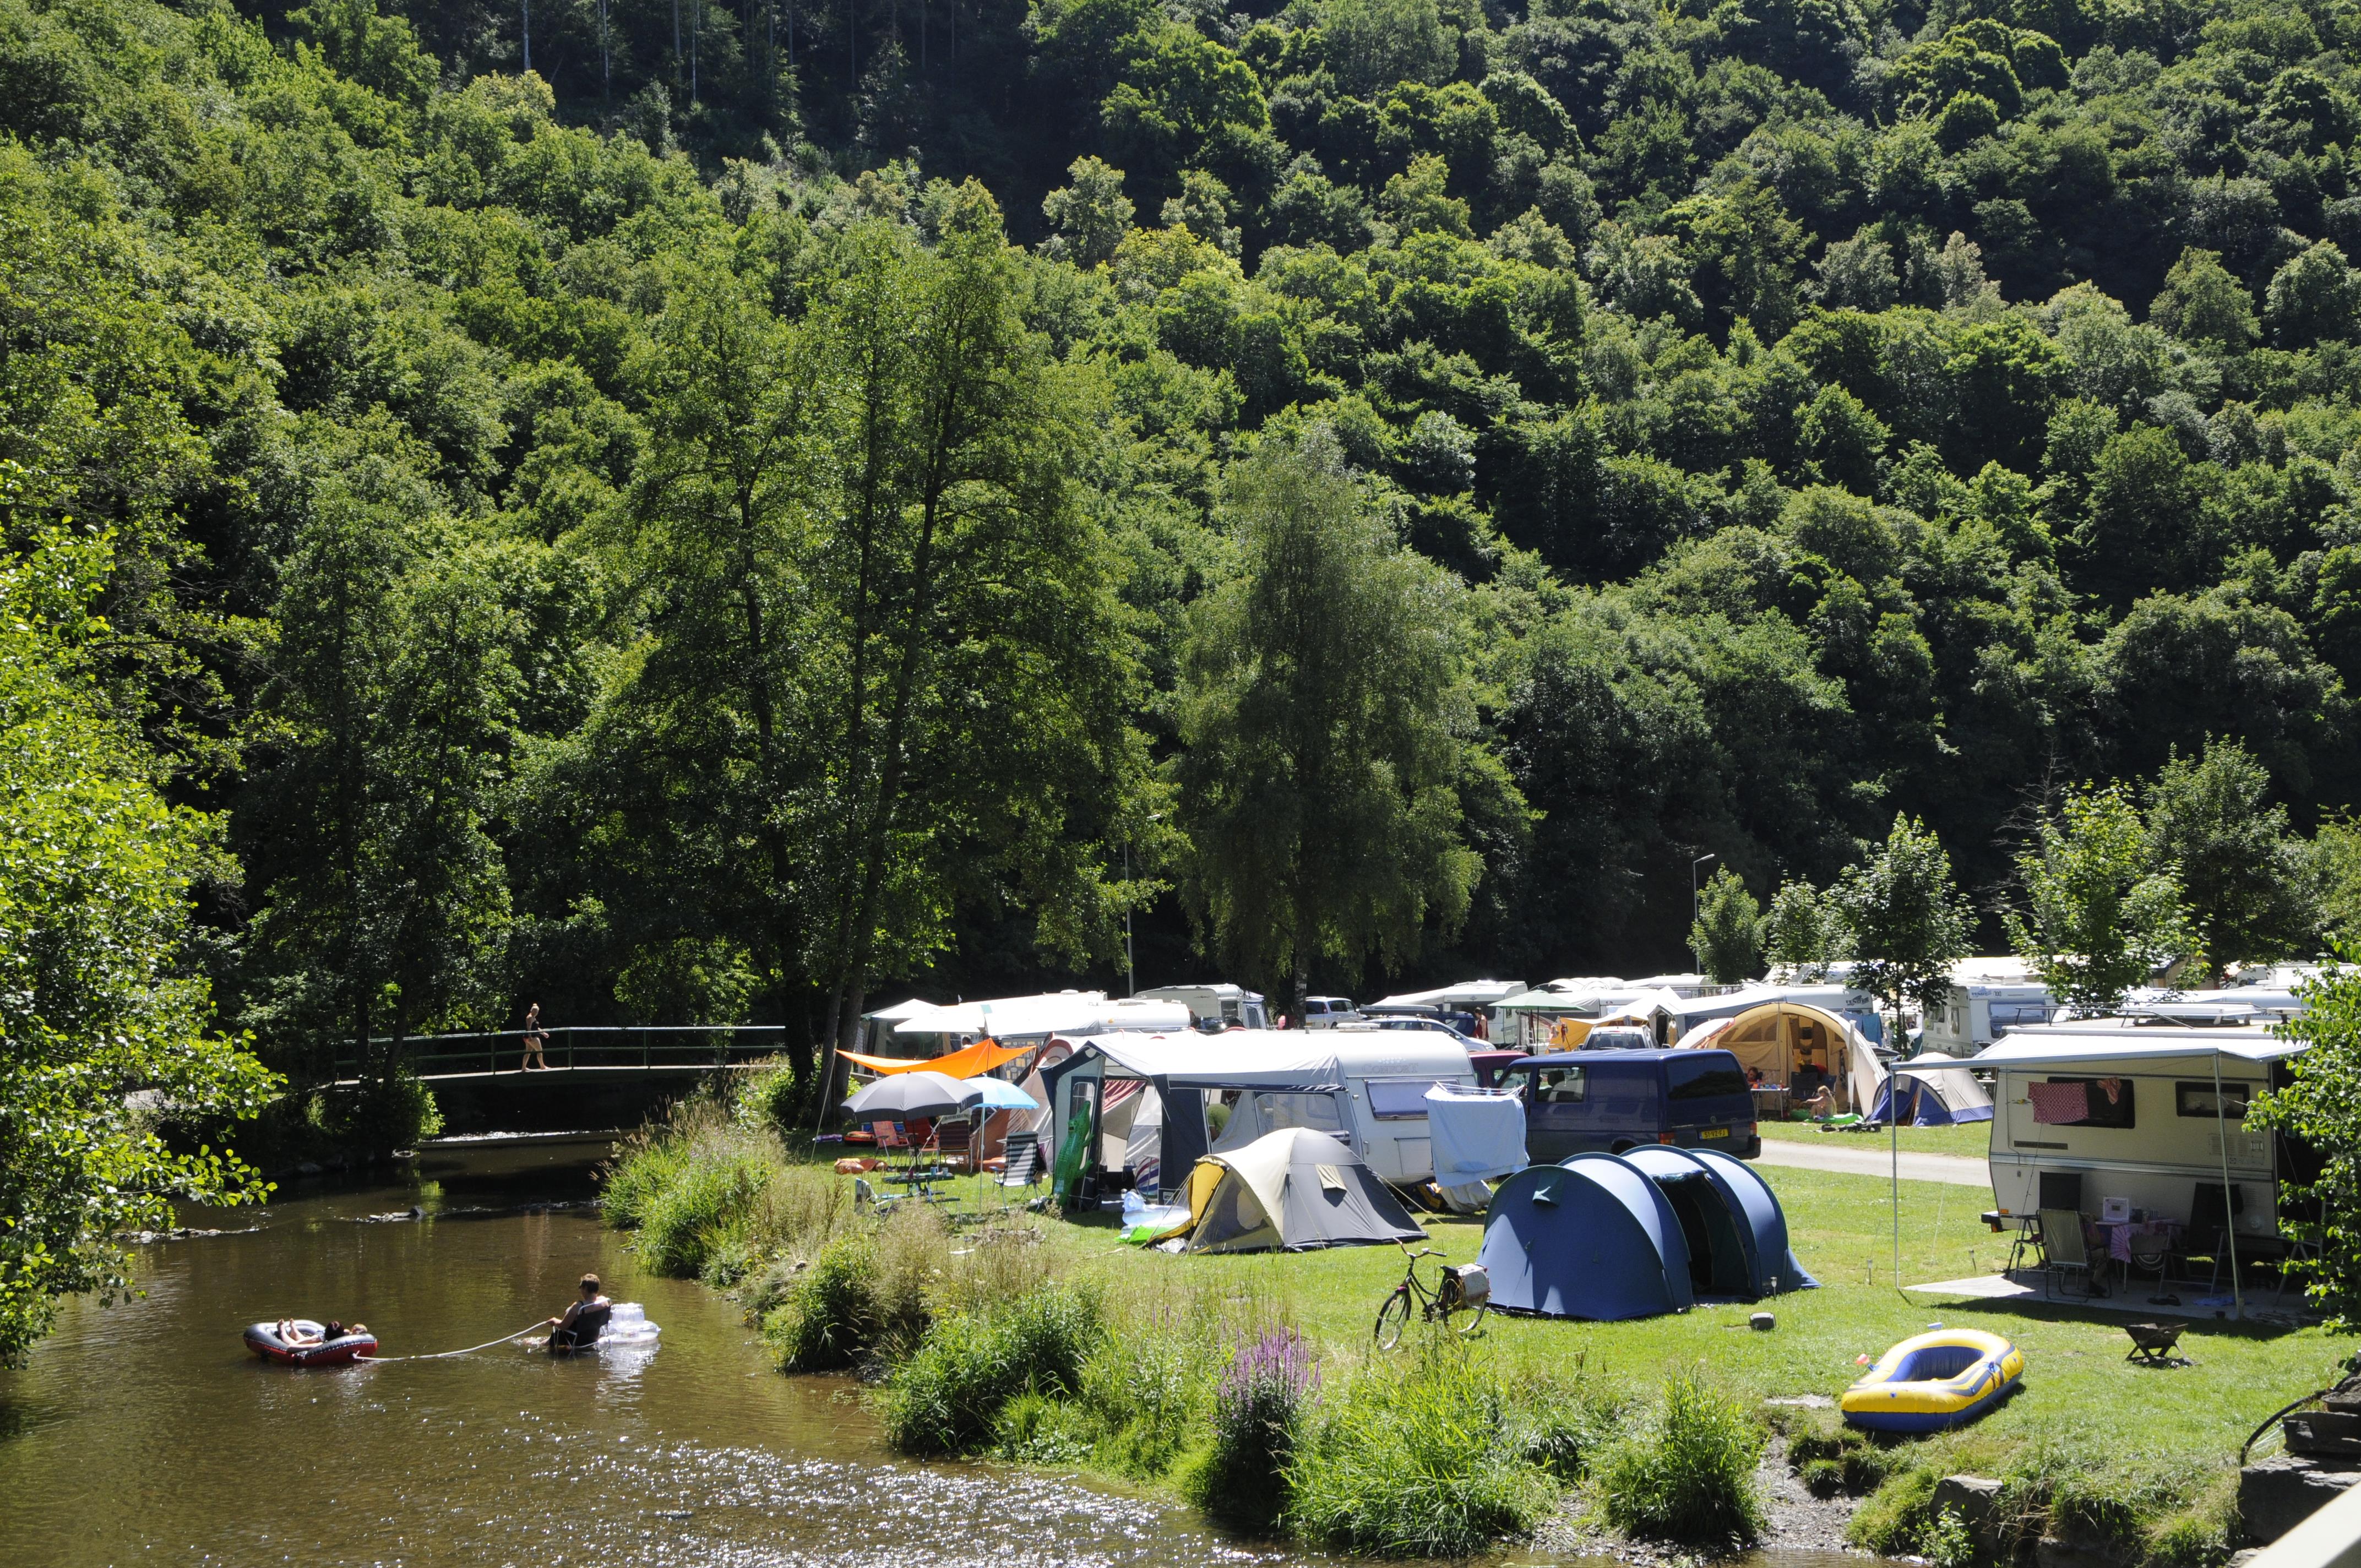 Establishment Camping Kautenbach - Kautenbach